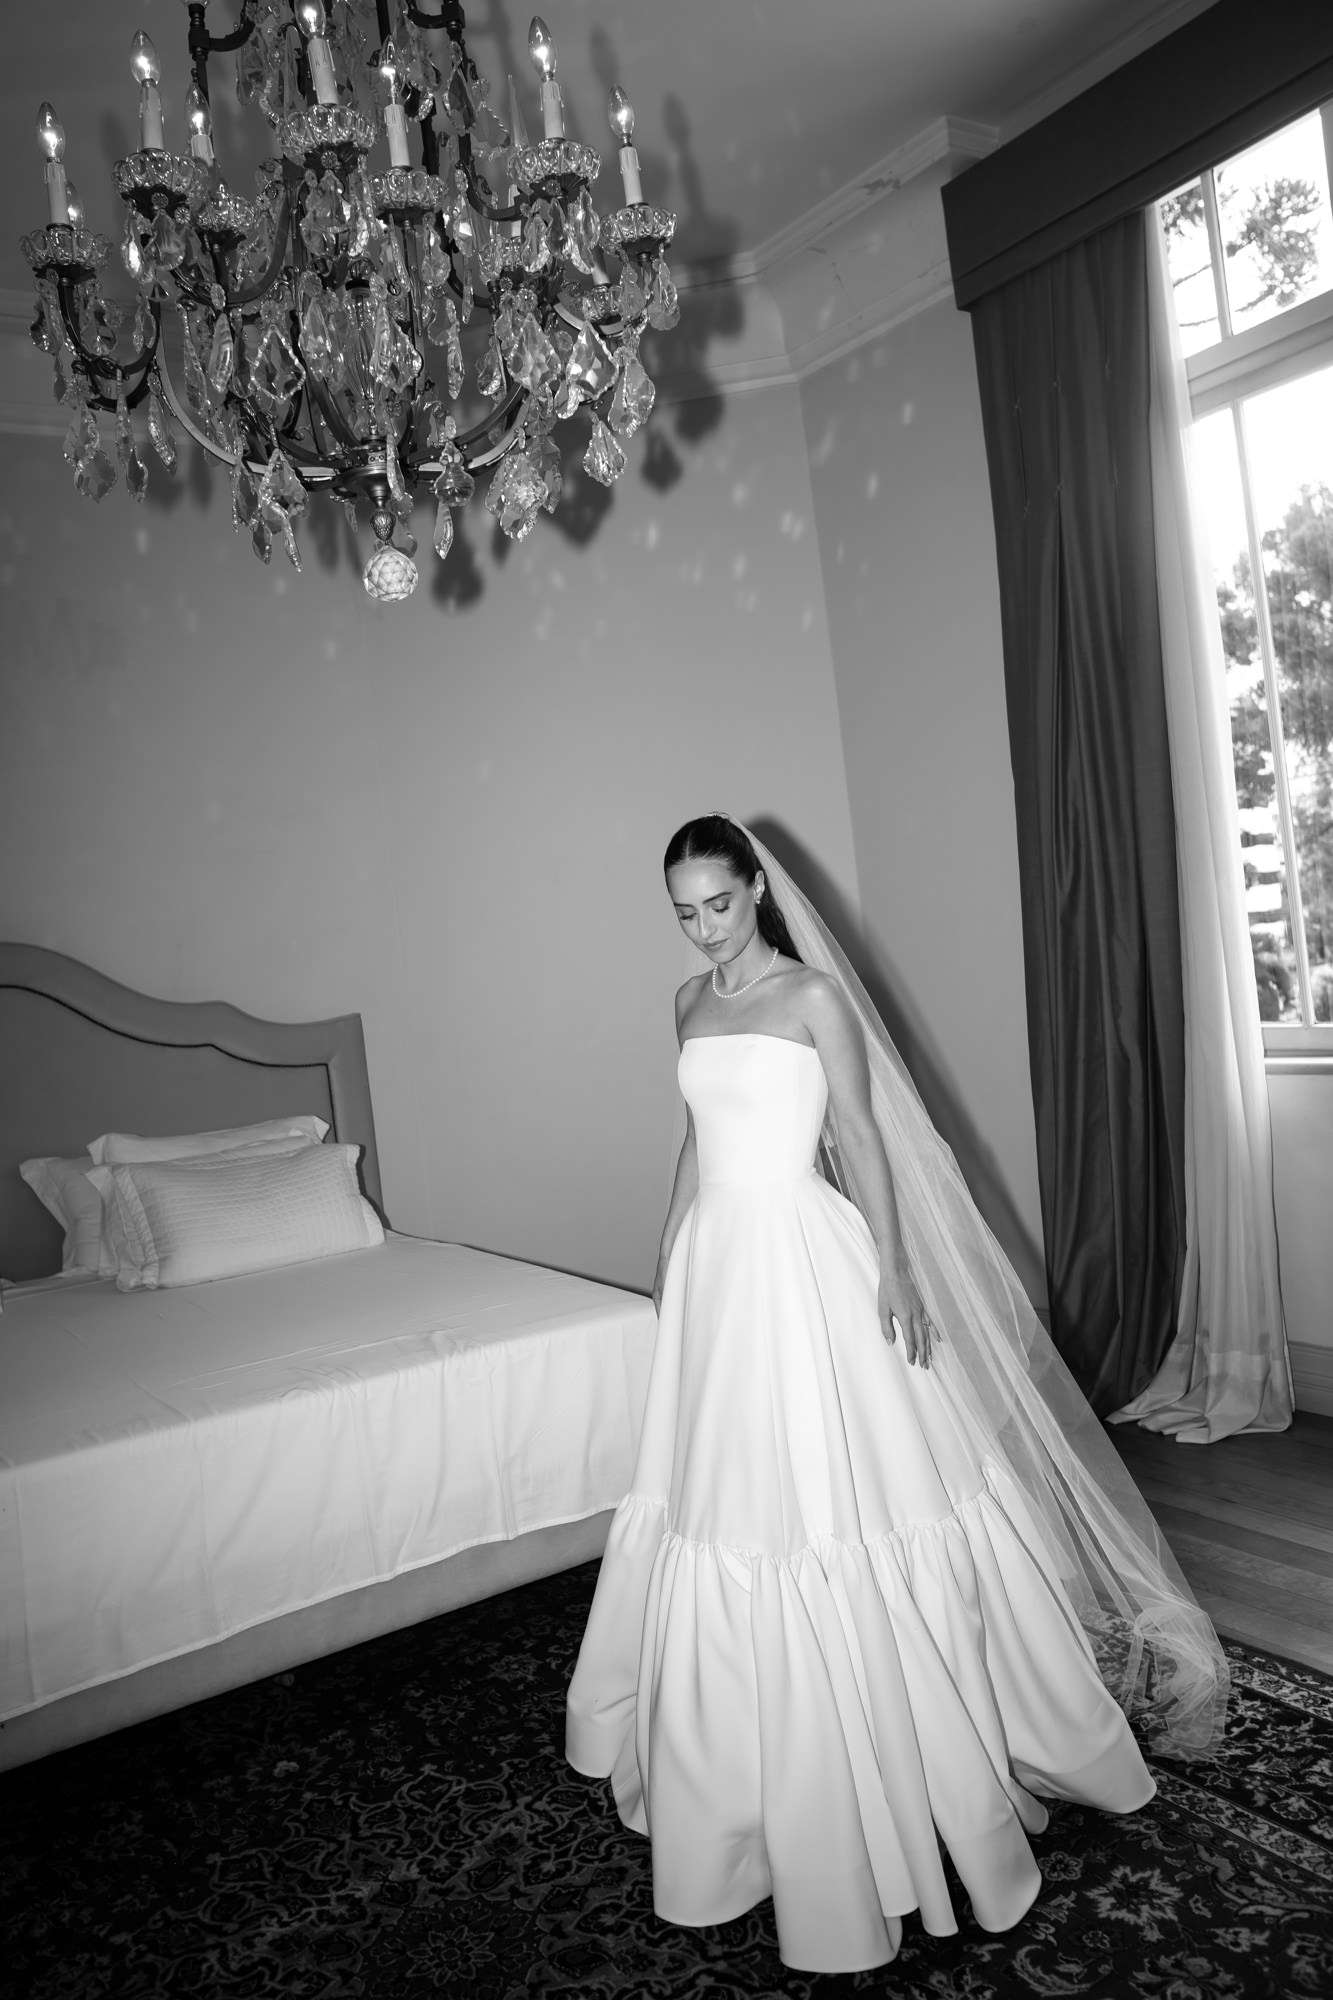 Vestido de noiva Julia Alcantara assinado por Rebeca Nepomuceno | Foto: Ale Bigliazzi